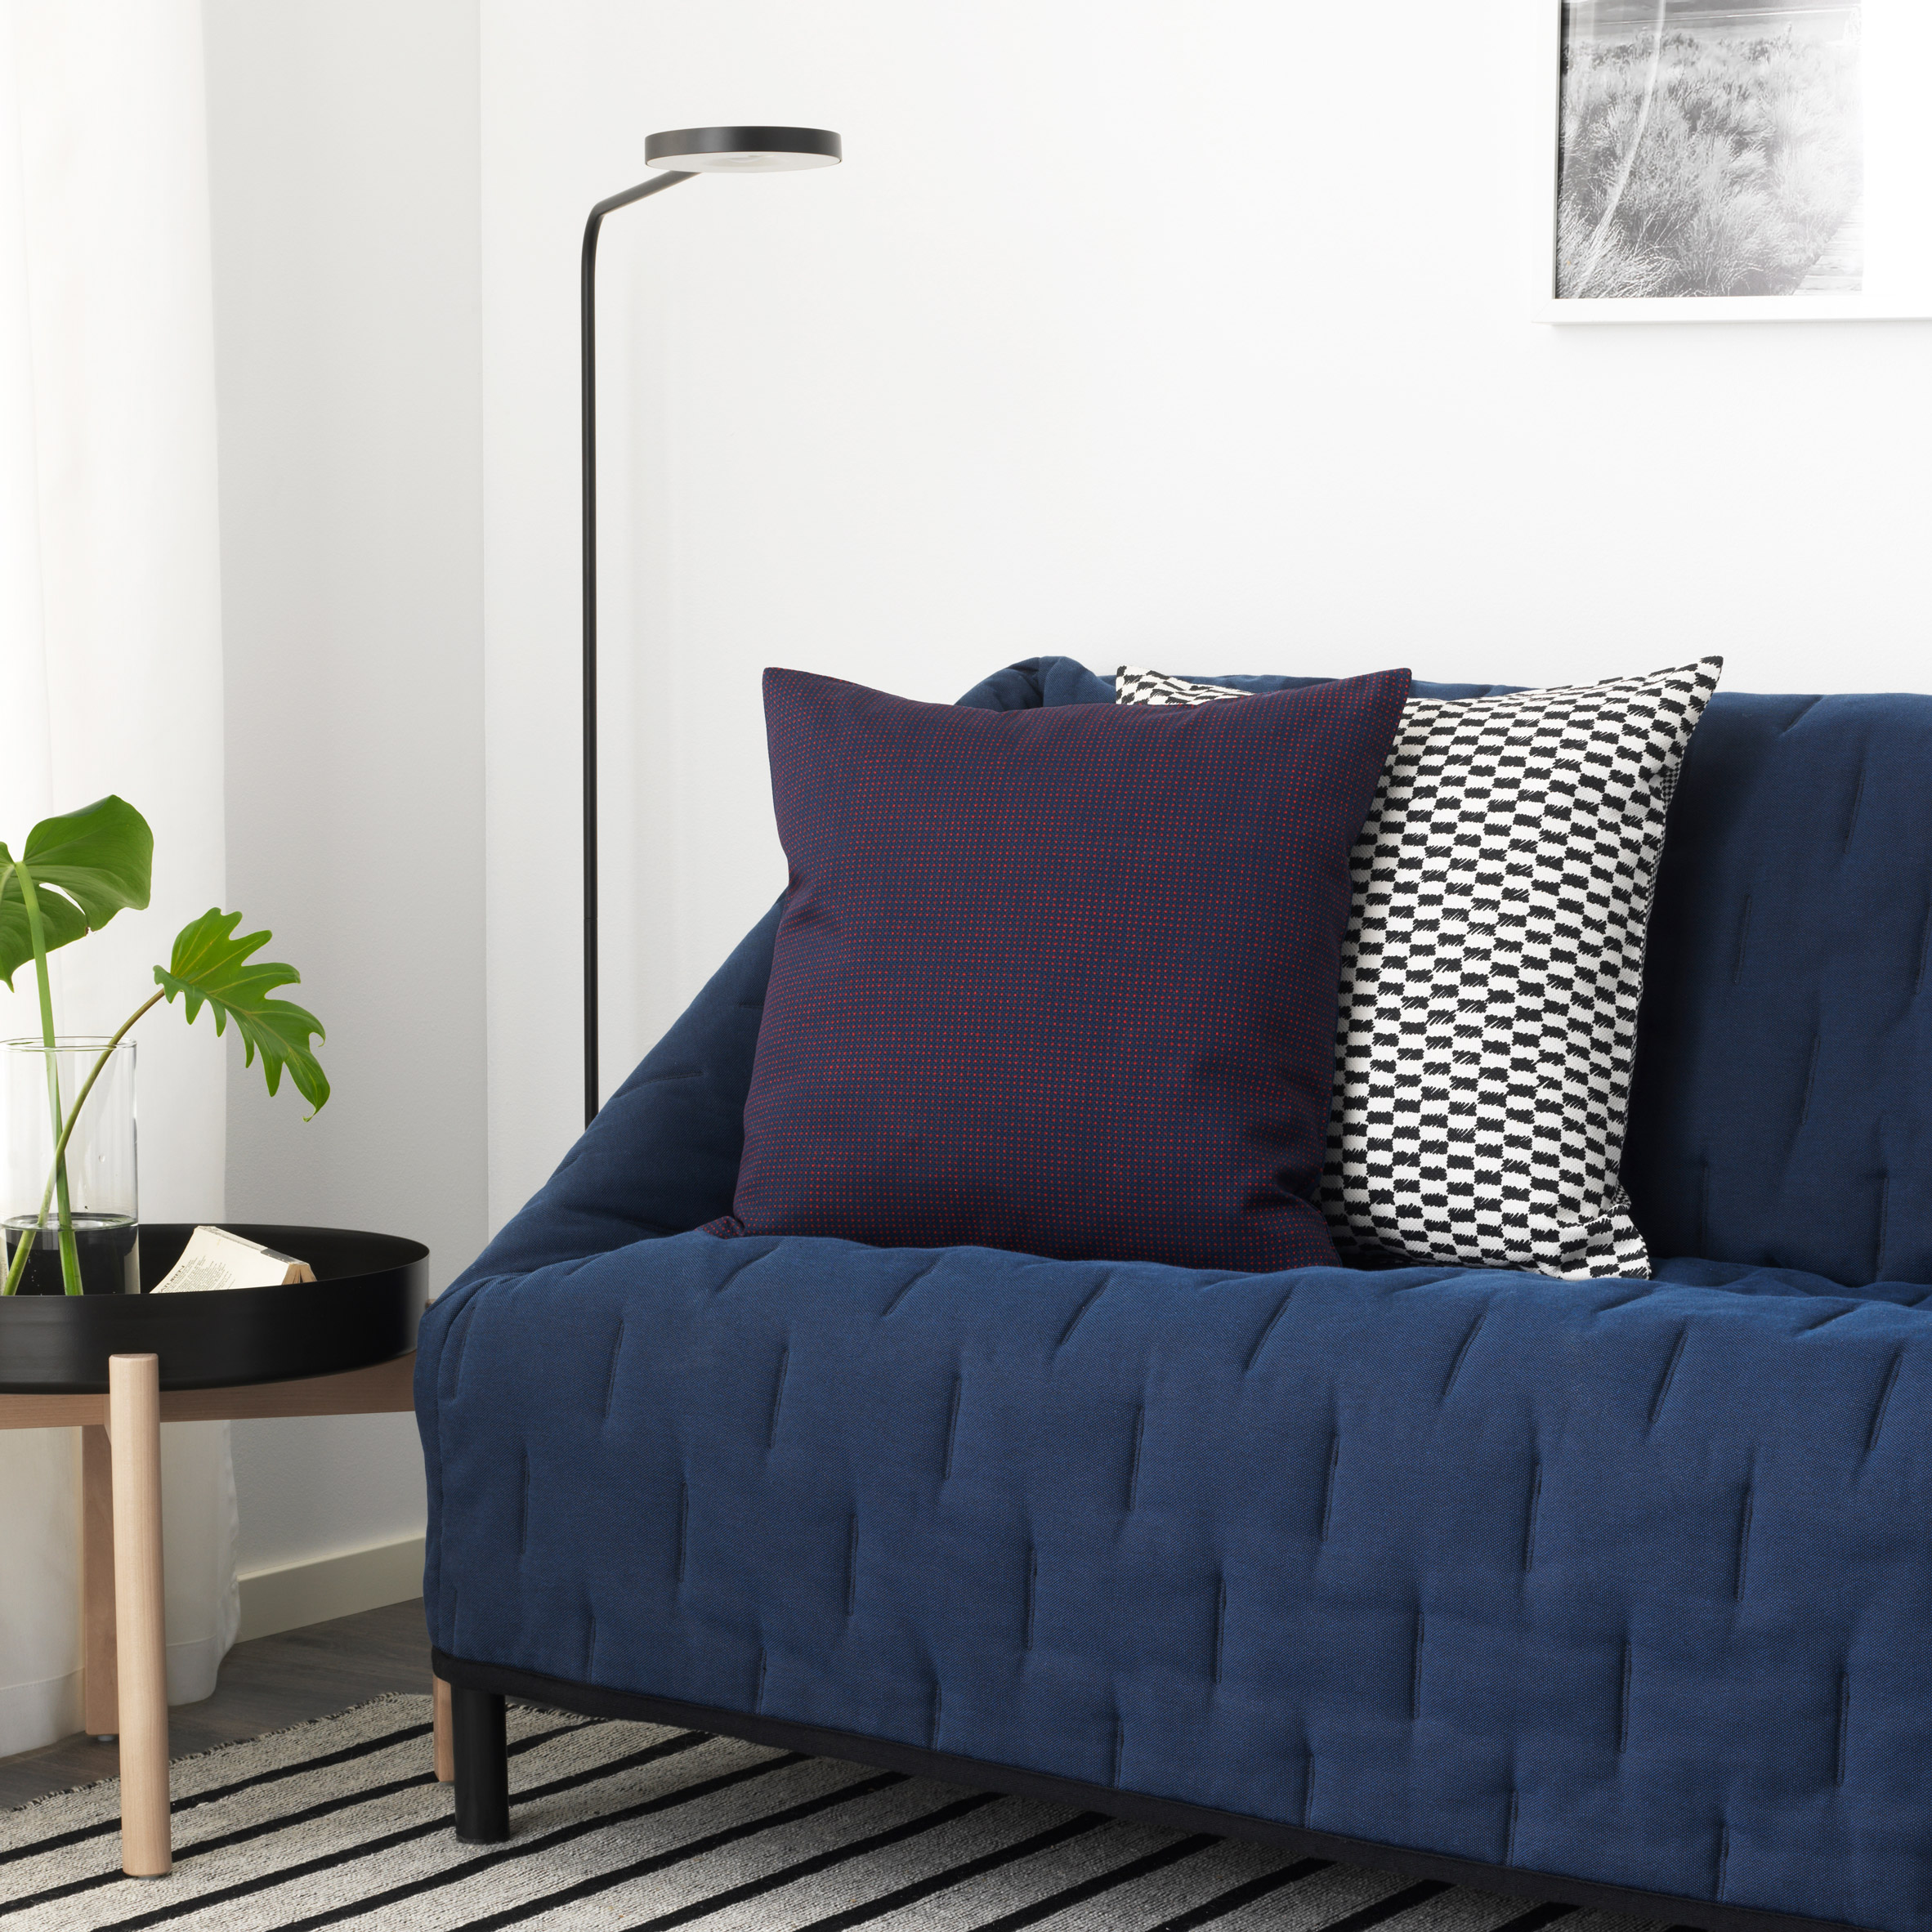 Narabar mini Peninsula IKEA and Hay reveal full collaborative Ypperlig collection